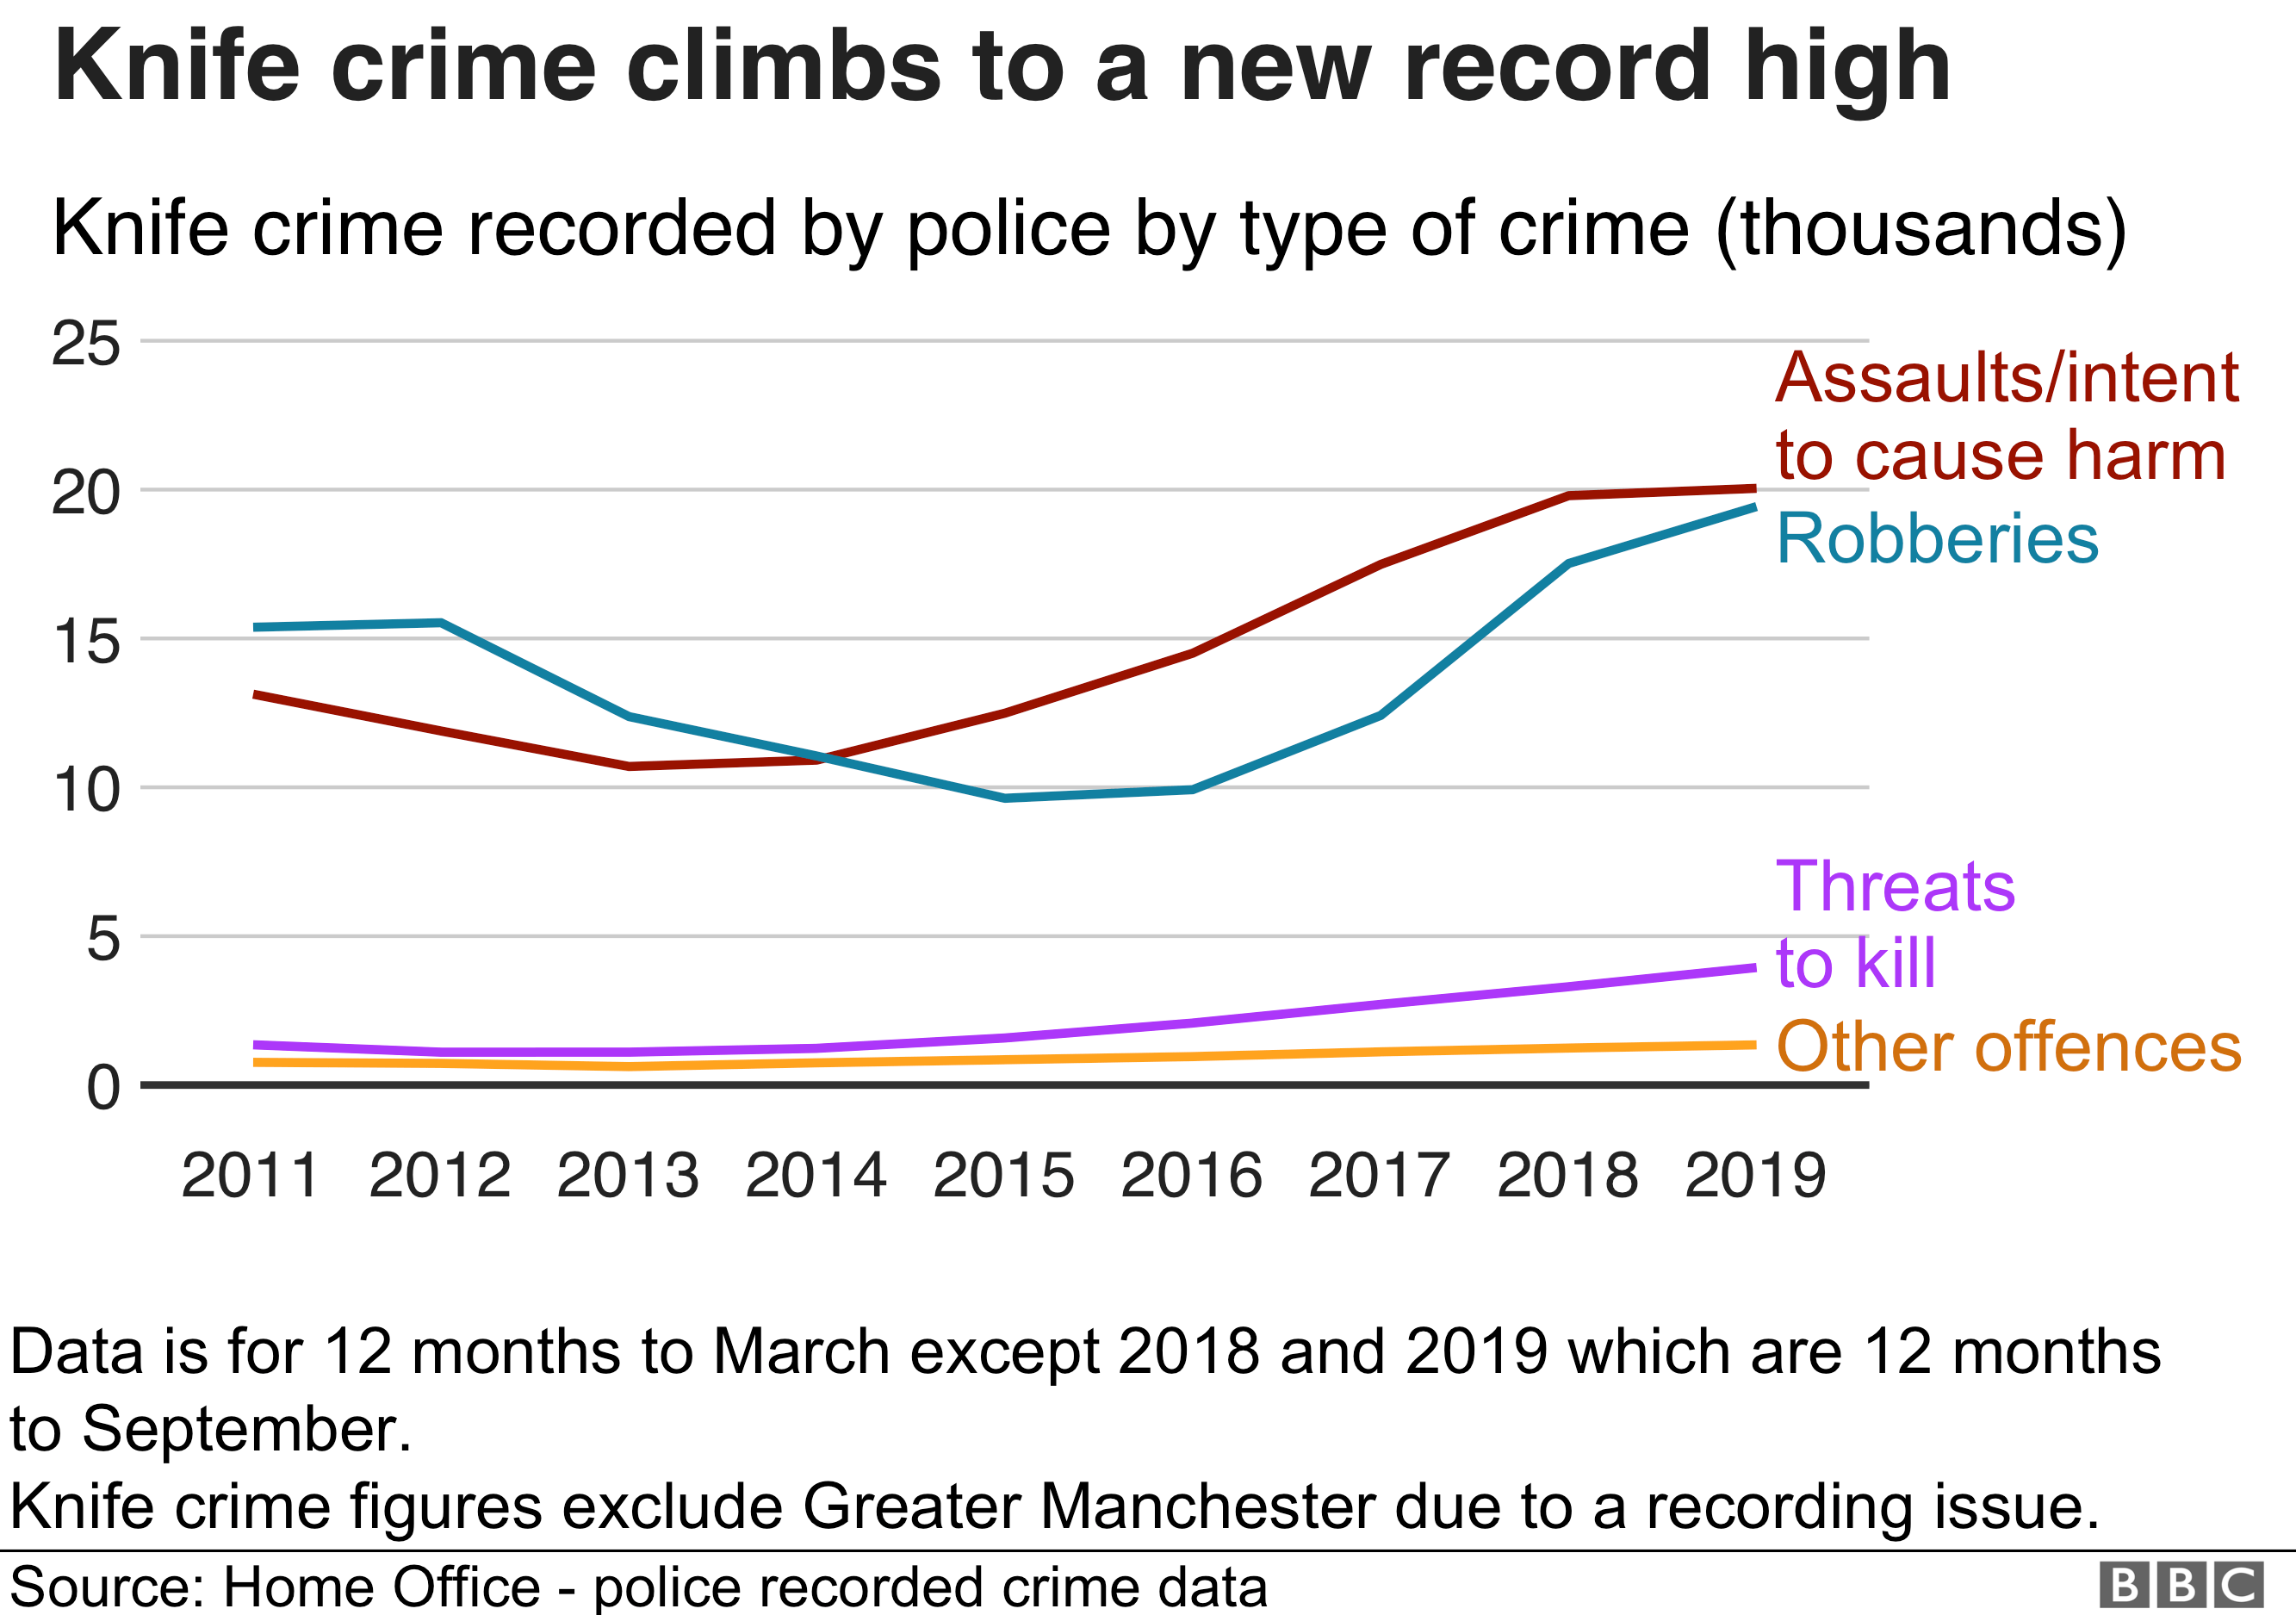  110617889 Optimised Knife Crime Chart Nc 